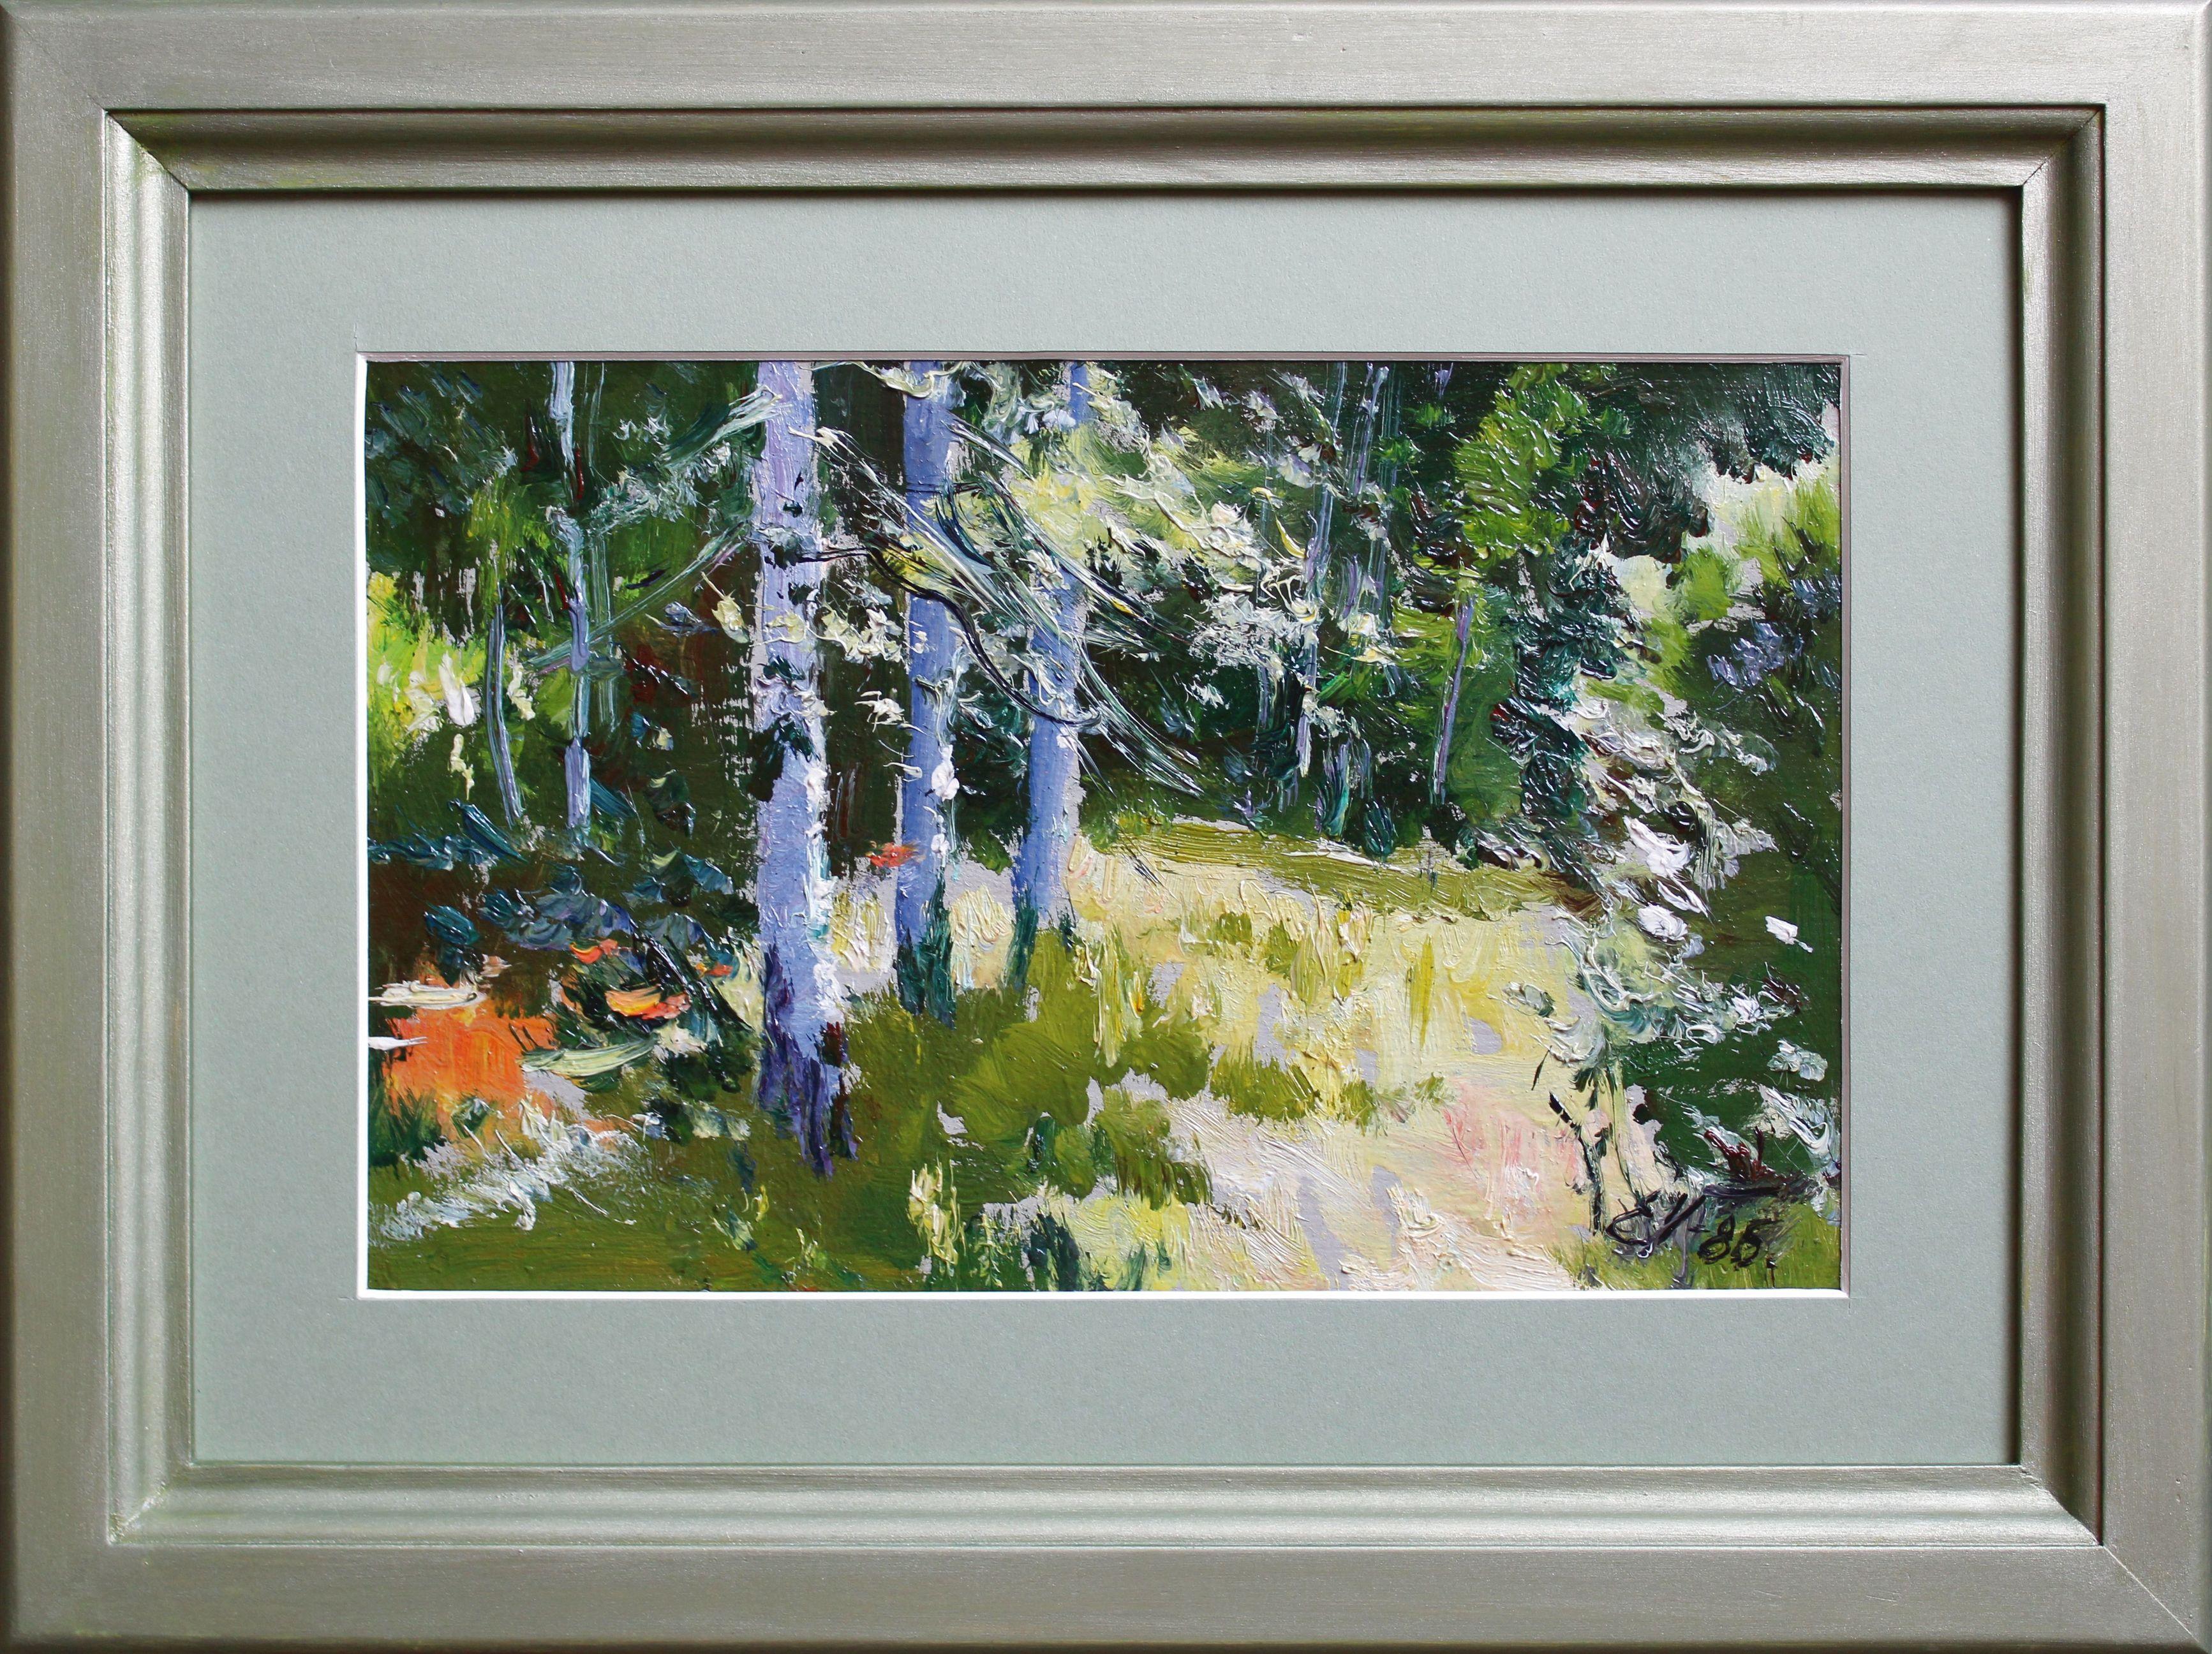 Sunny meadow. 1985, cardboard, oil, 21.5x33 cm - Impressionist Art by Edgars Vinters